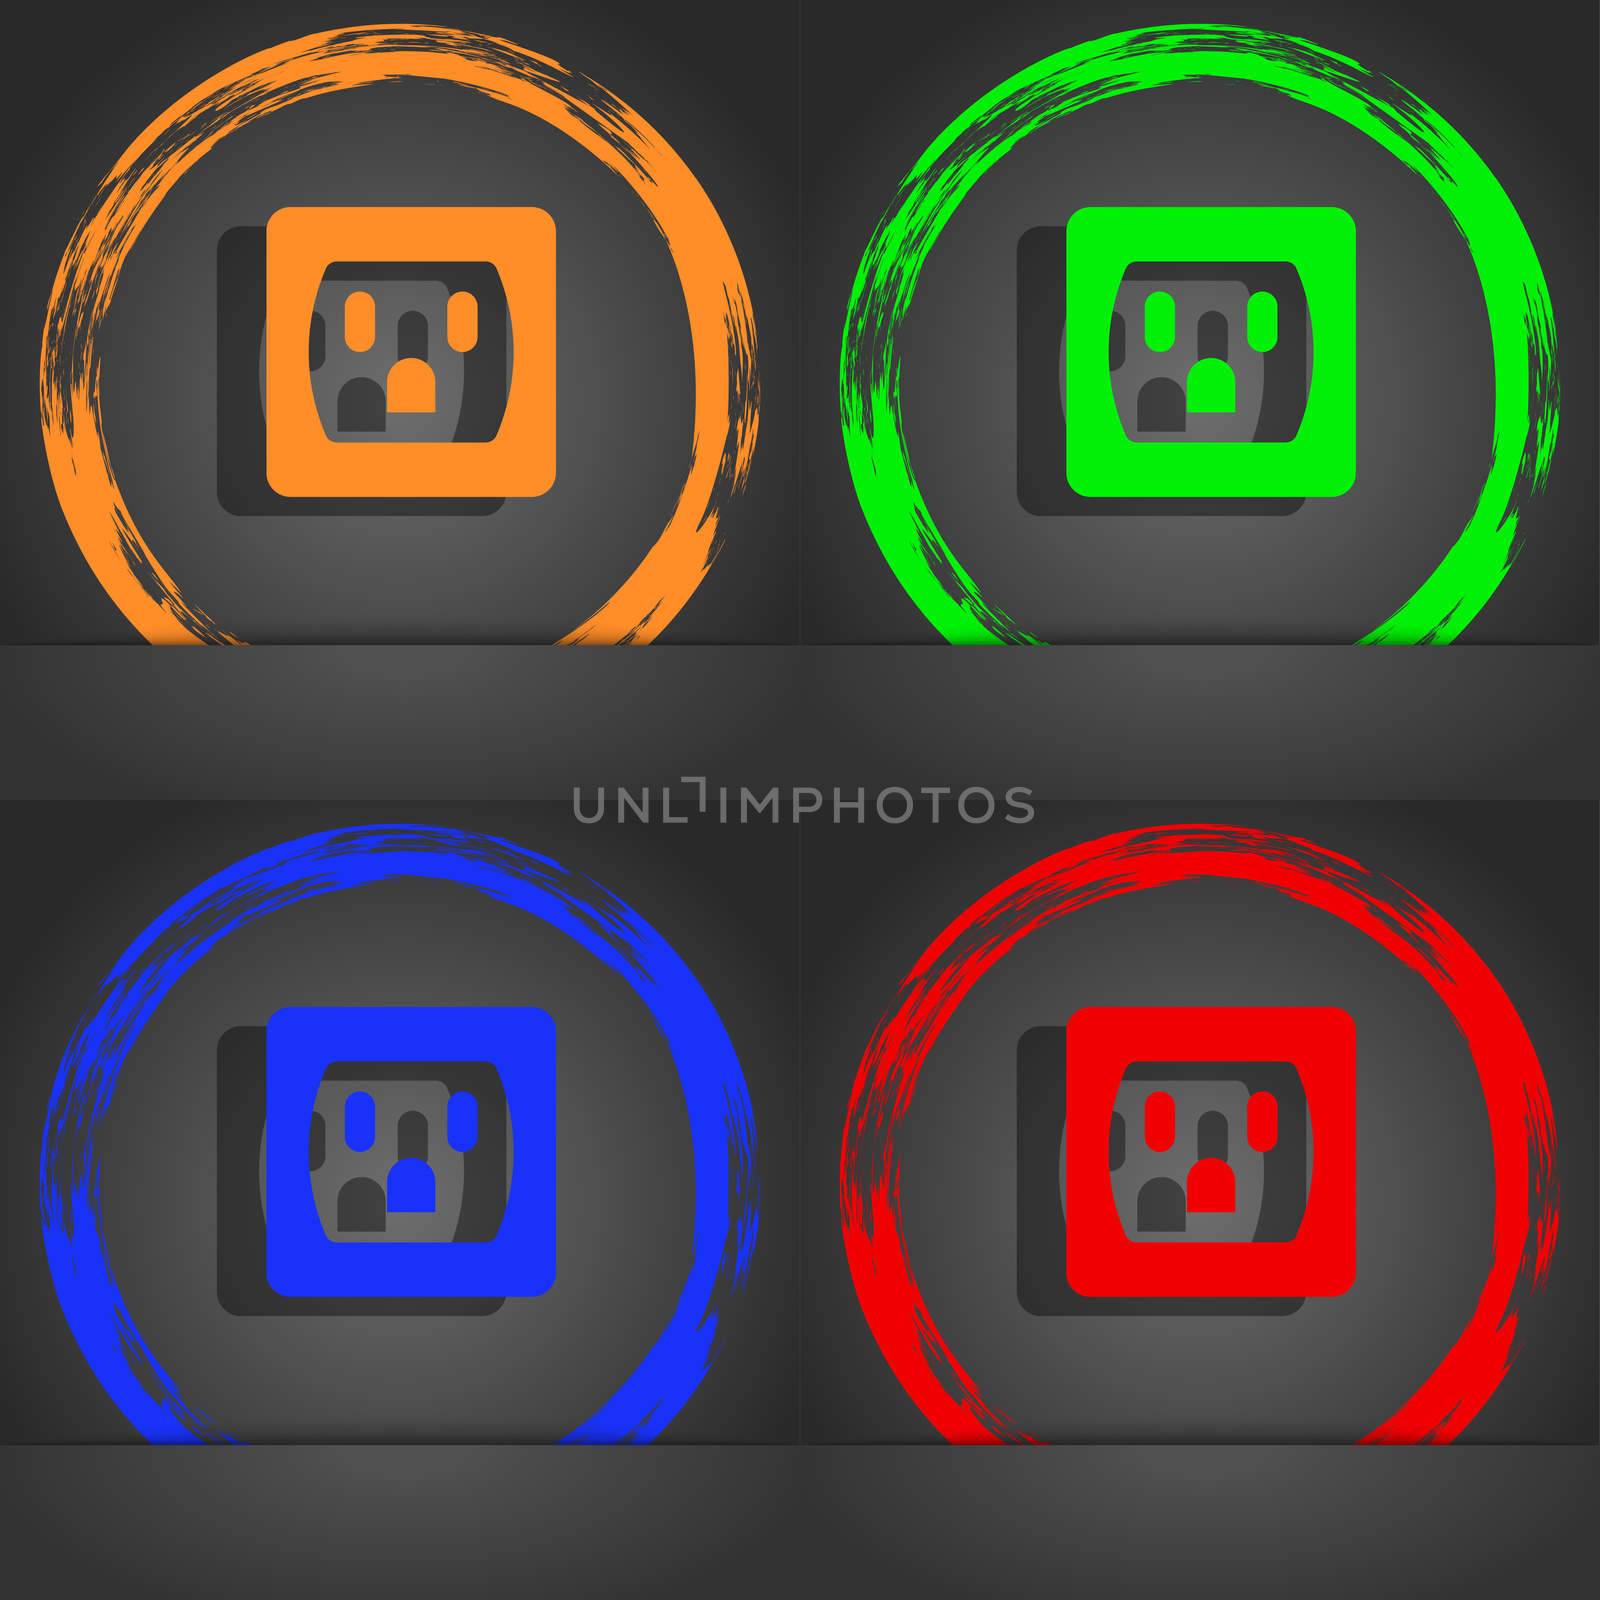 Electric plug, Power energy icon symbol. Fashionable modern style. In the orange, green, blue, green design. illustration